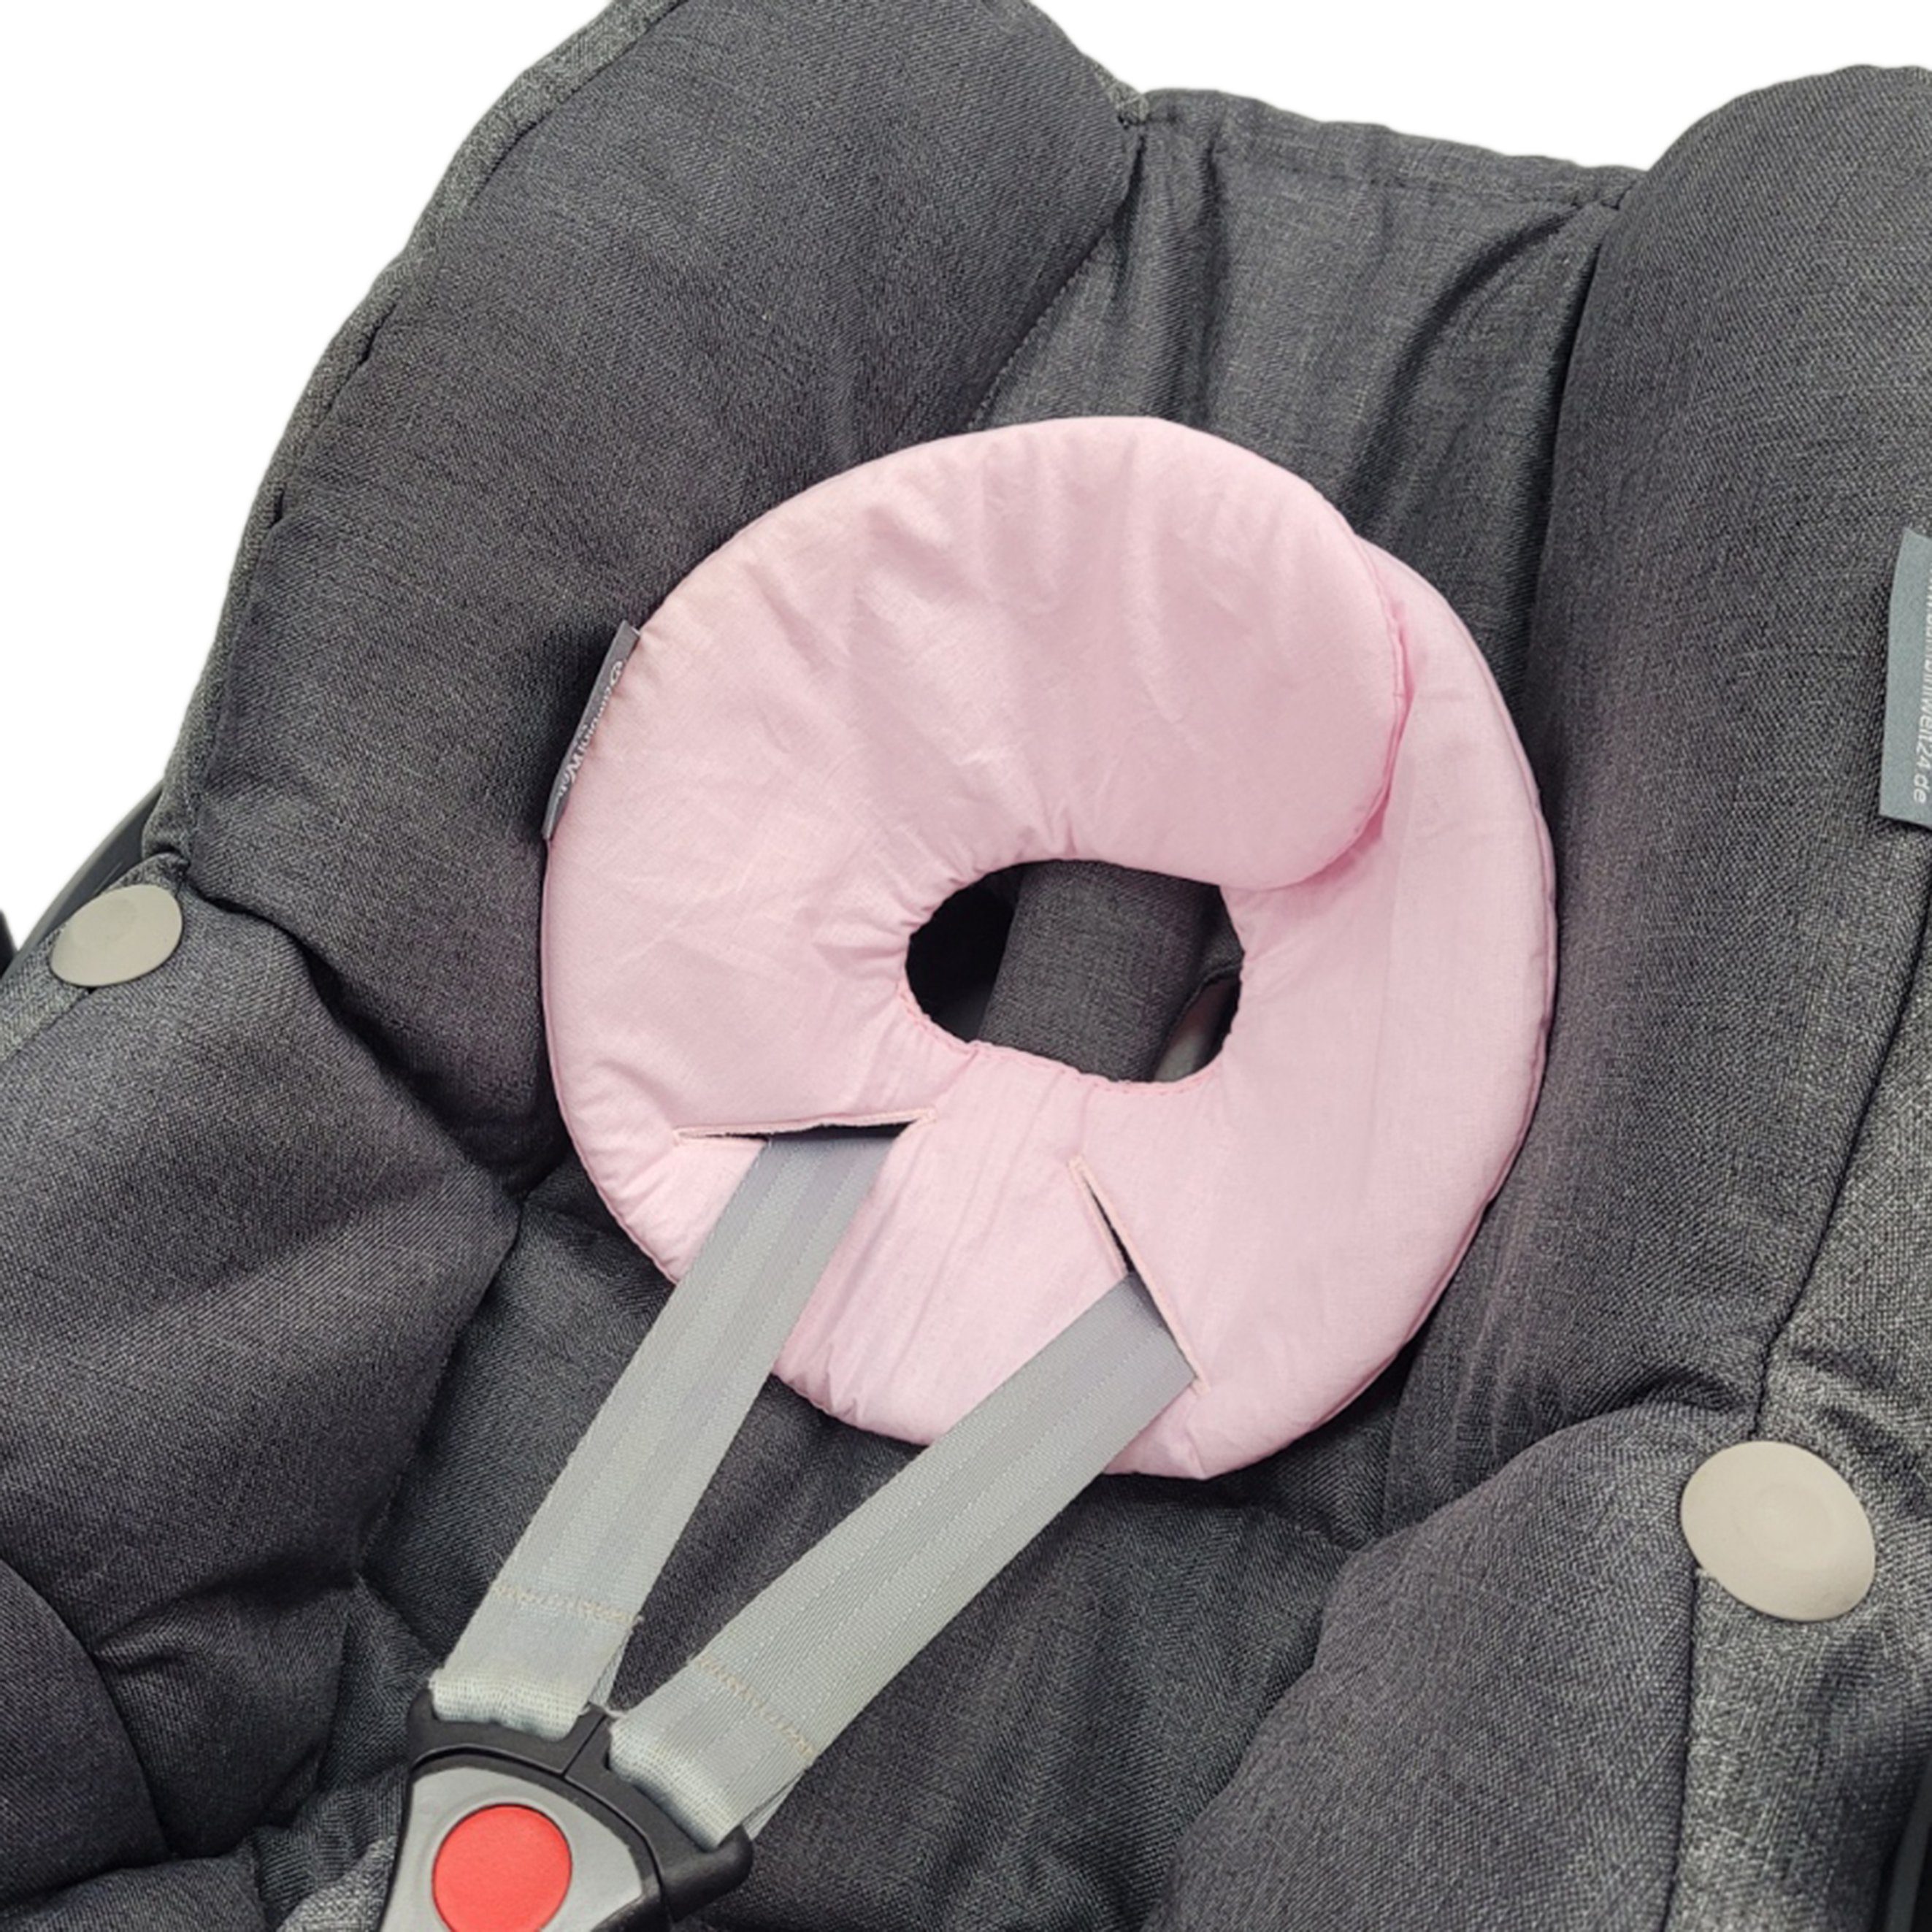 BambiniWelt by Rafael K. Babyschale Kopfpolster für Babyschale kompatibel mit Maxi-Cosi Pebble/Pebble Plus, ab: Geburt, bis: bis ca. 14 Monate Baumwolle rosa